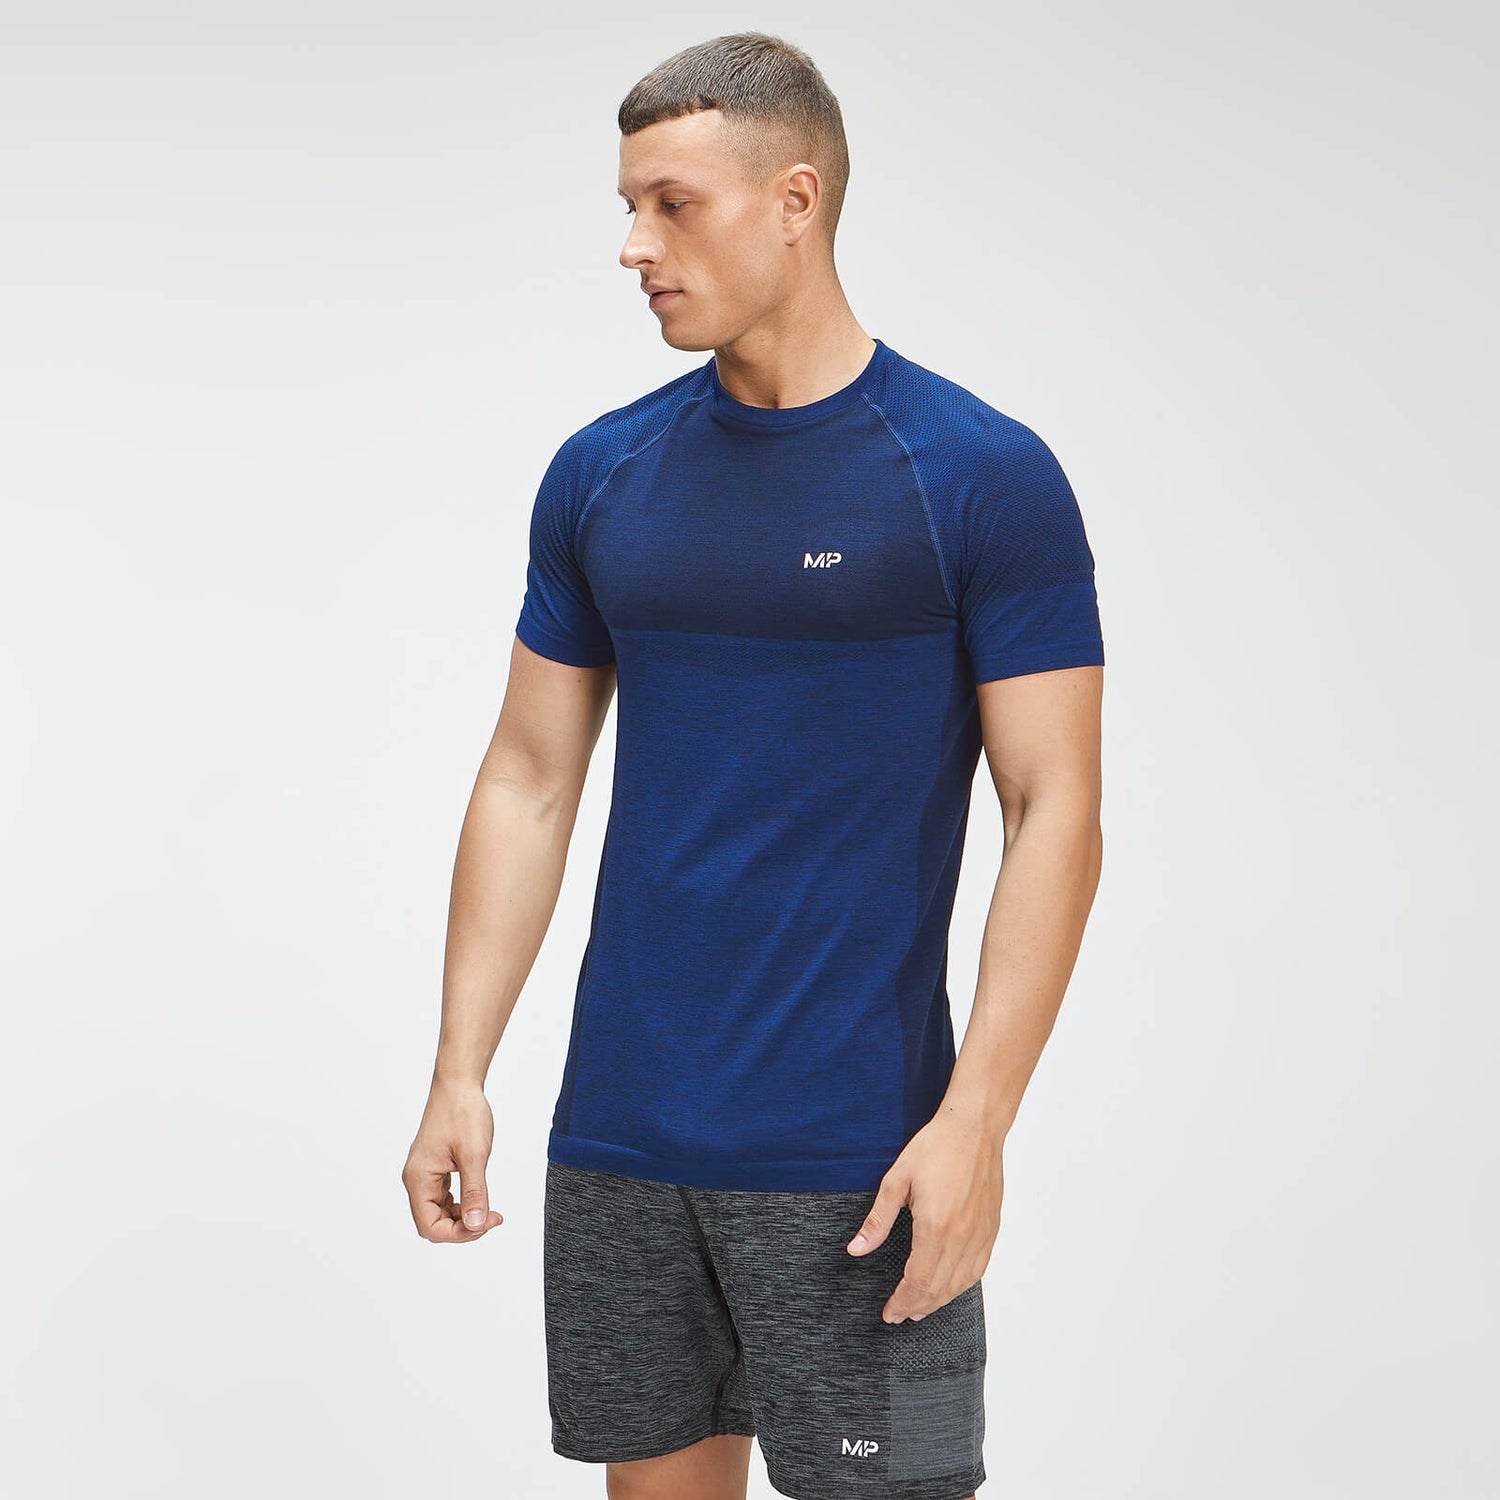 Camiseta de manga corta sin costuras Essentials para hombre de MP - Azul intenso jaspeado - XS